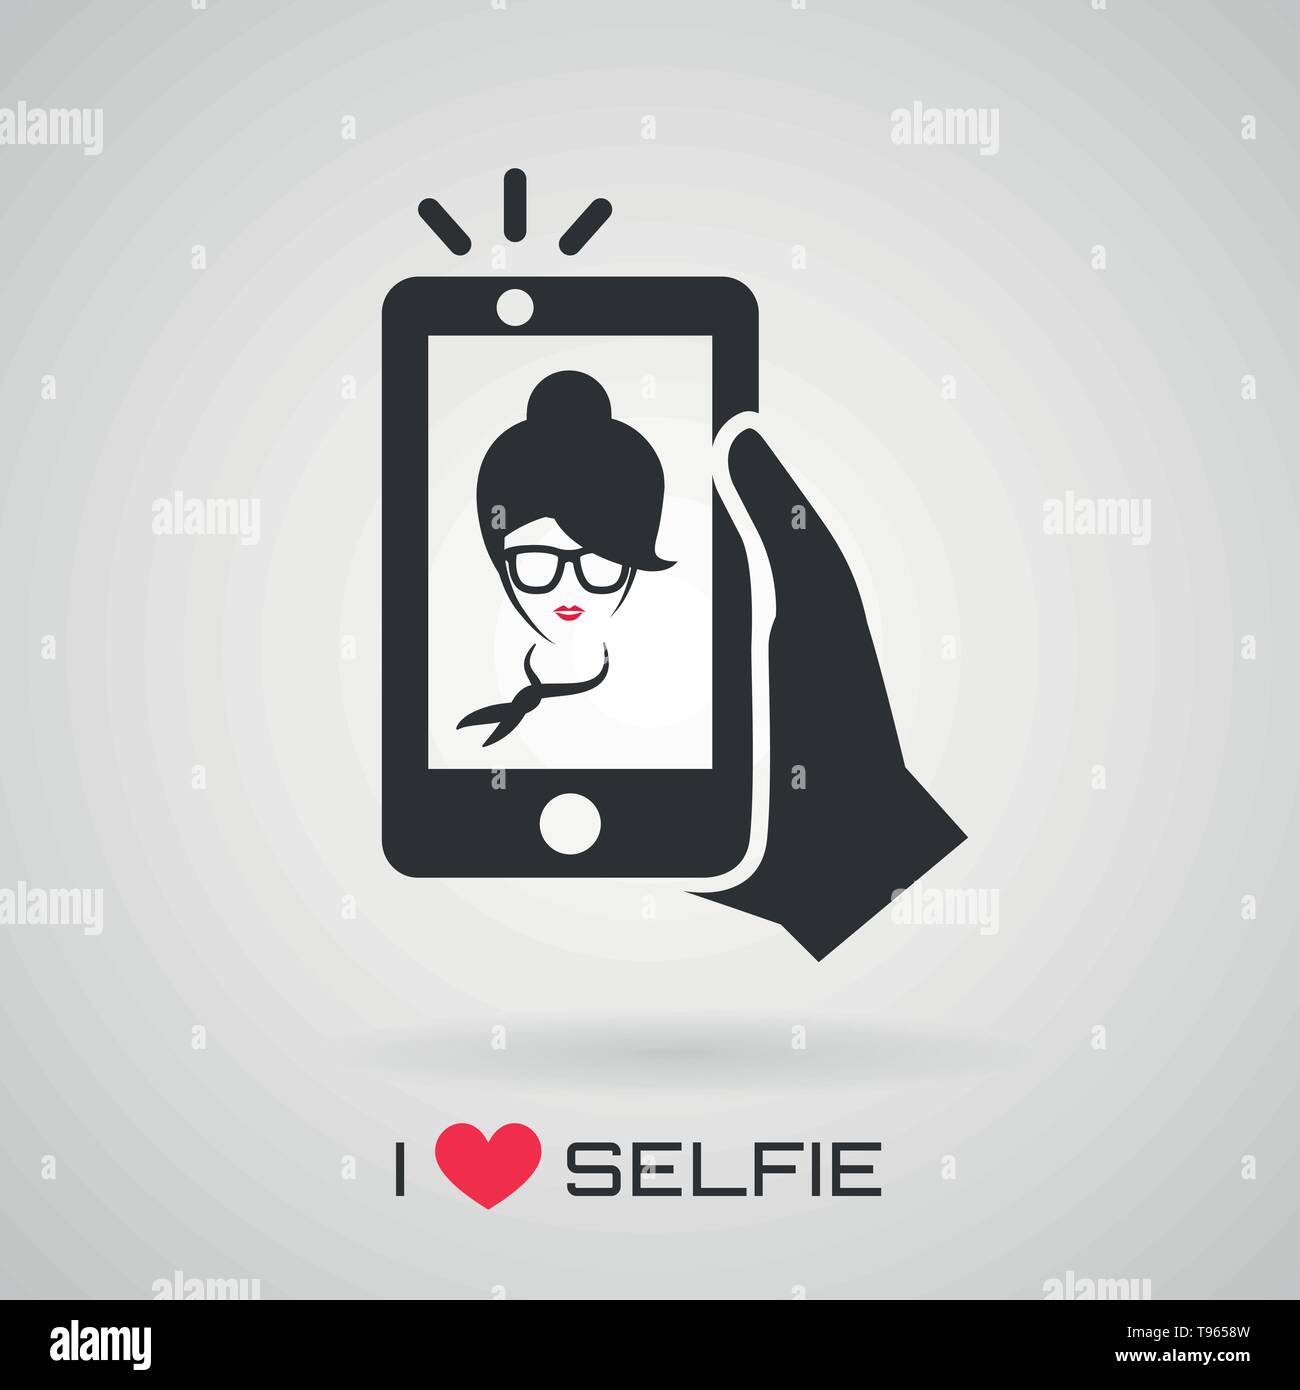 I love selfie. Selfie icon. Trendy woman taking a self portrait on smart phone. Vector illustration. Stock Vector